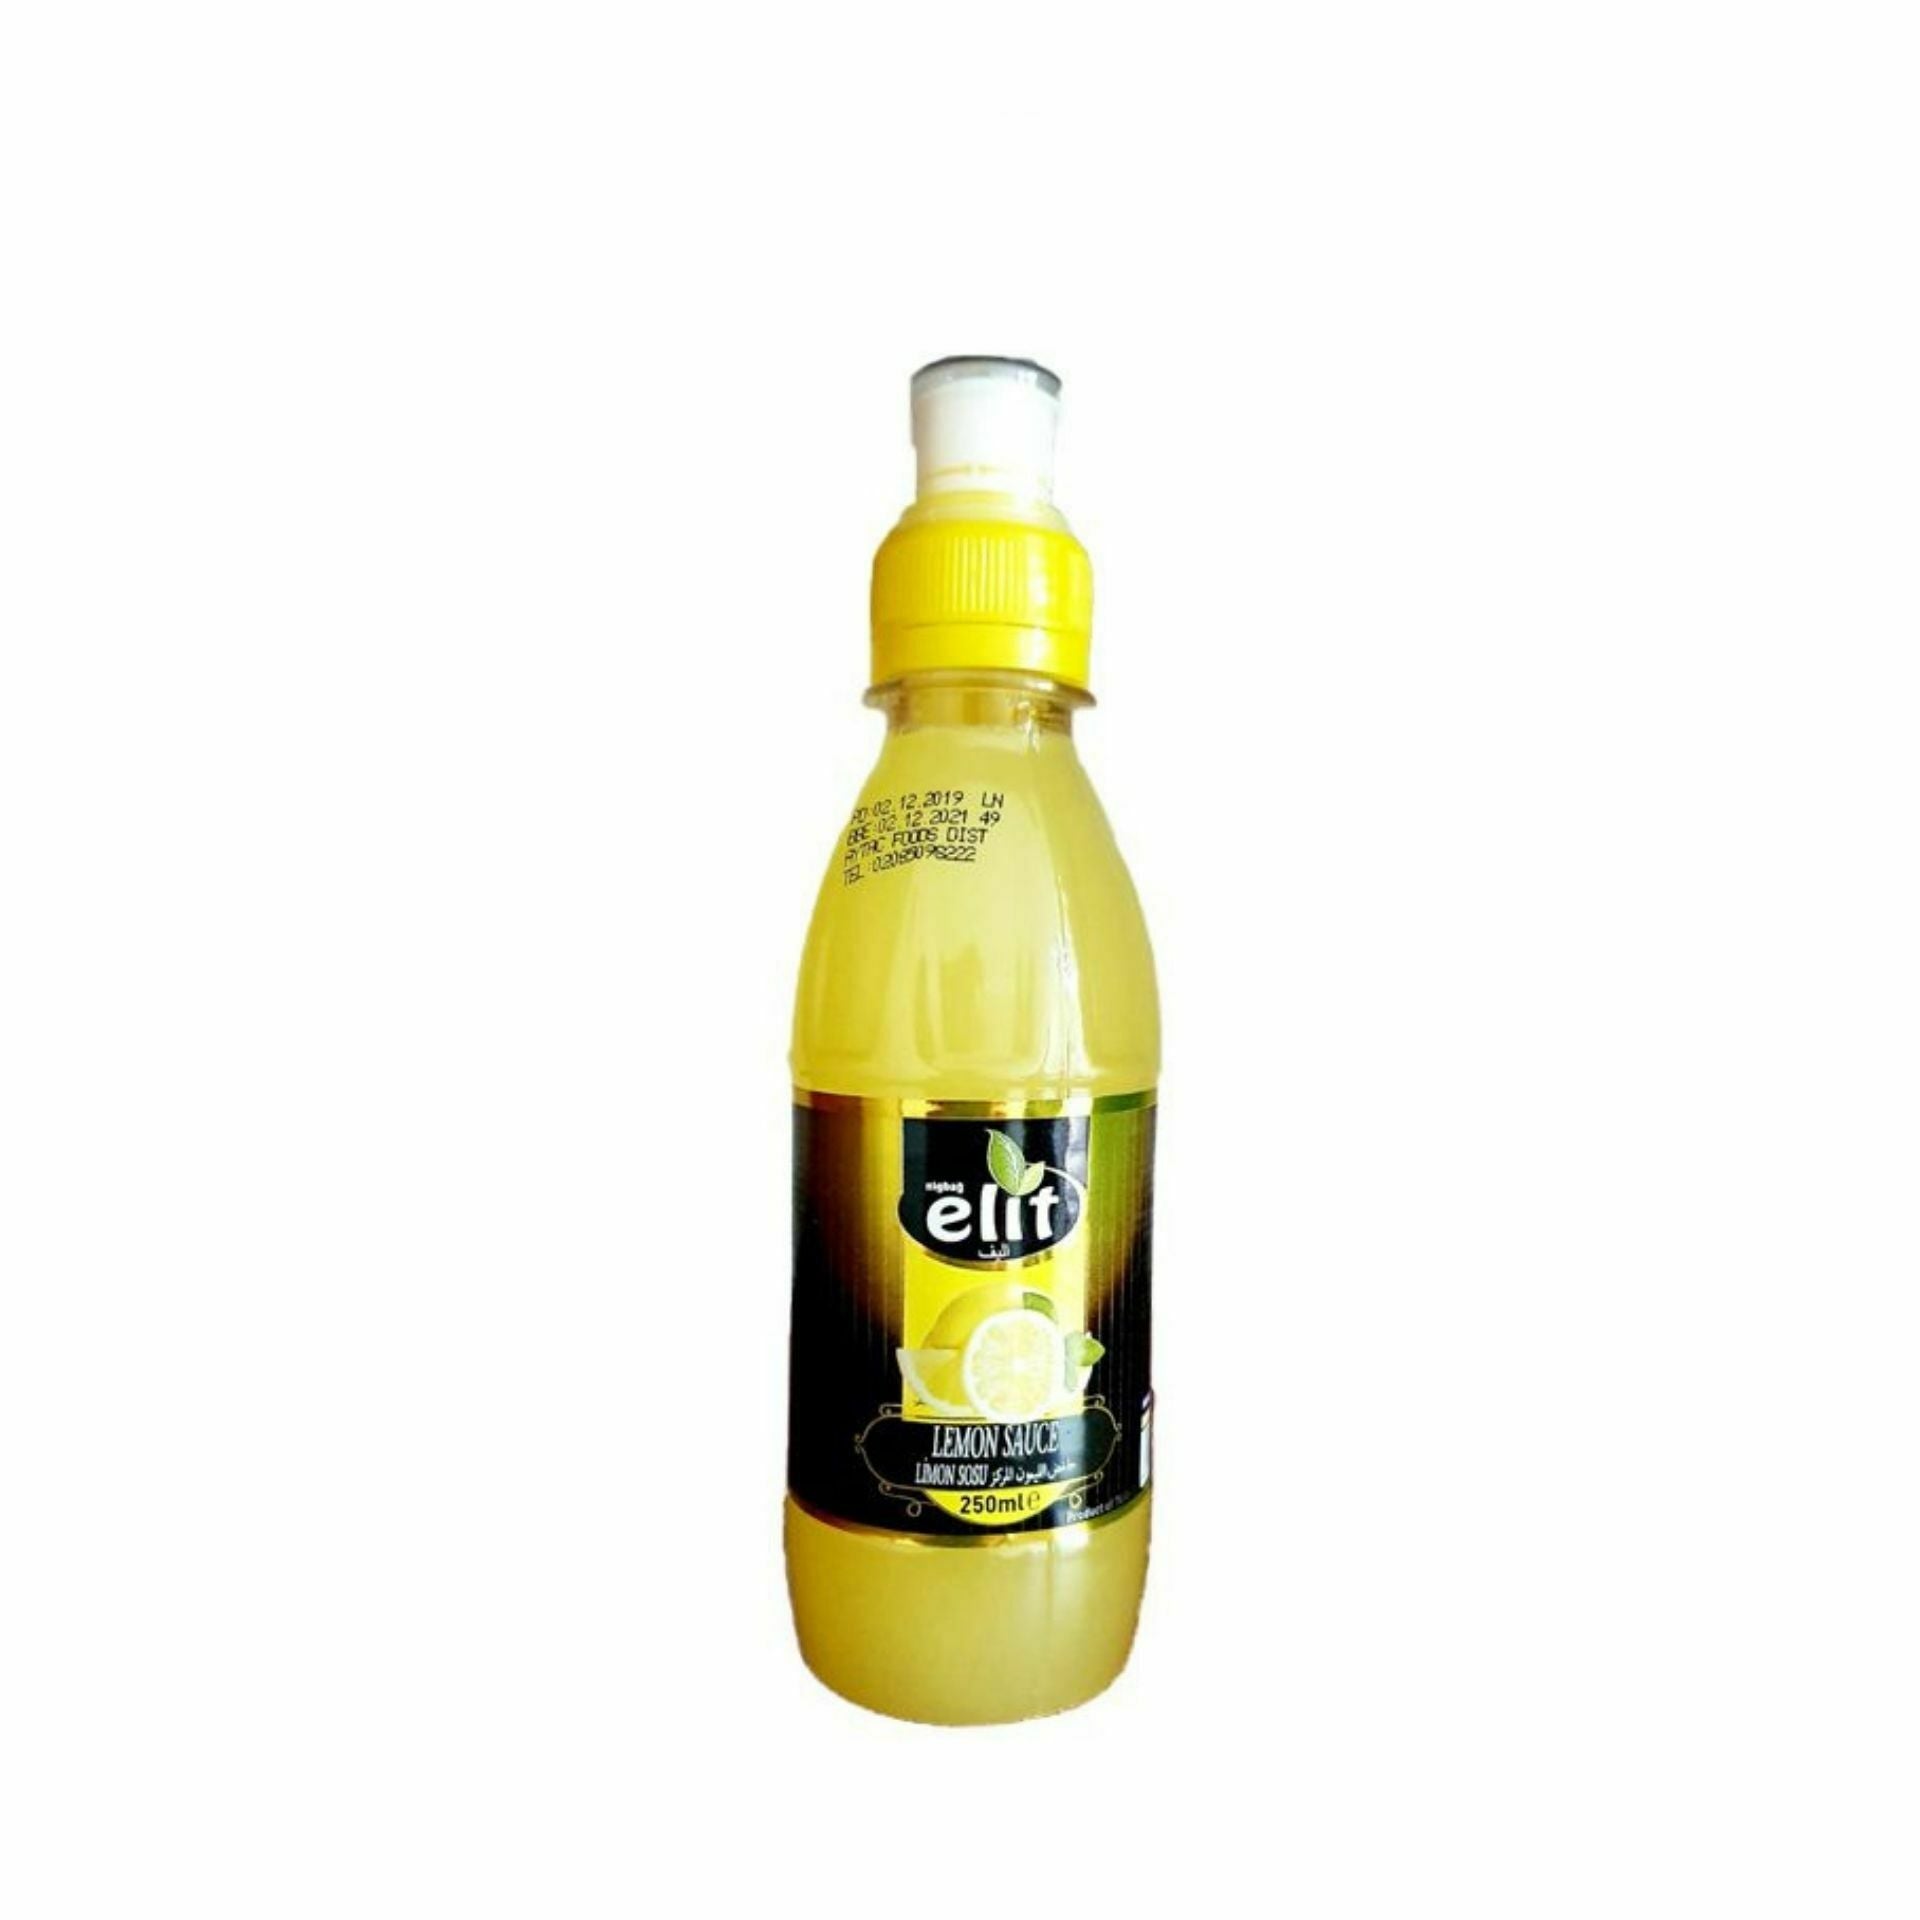 Elit Lemon Sauce (250ml) - Aytac Foods